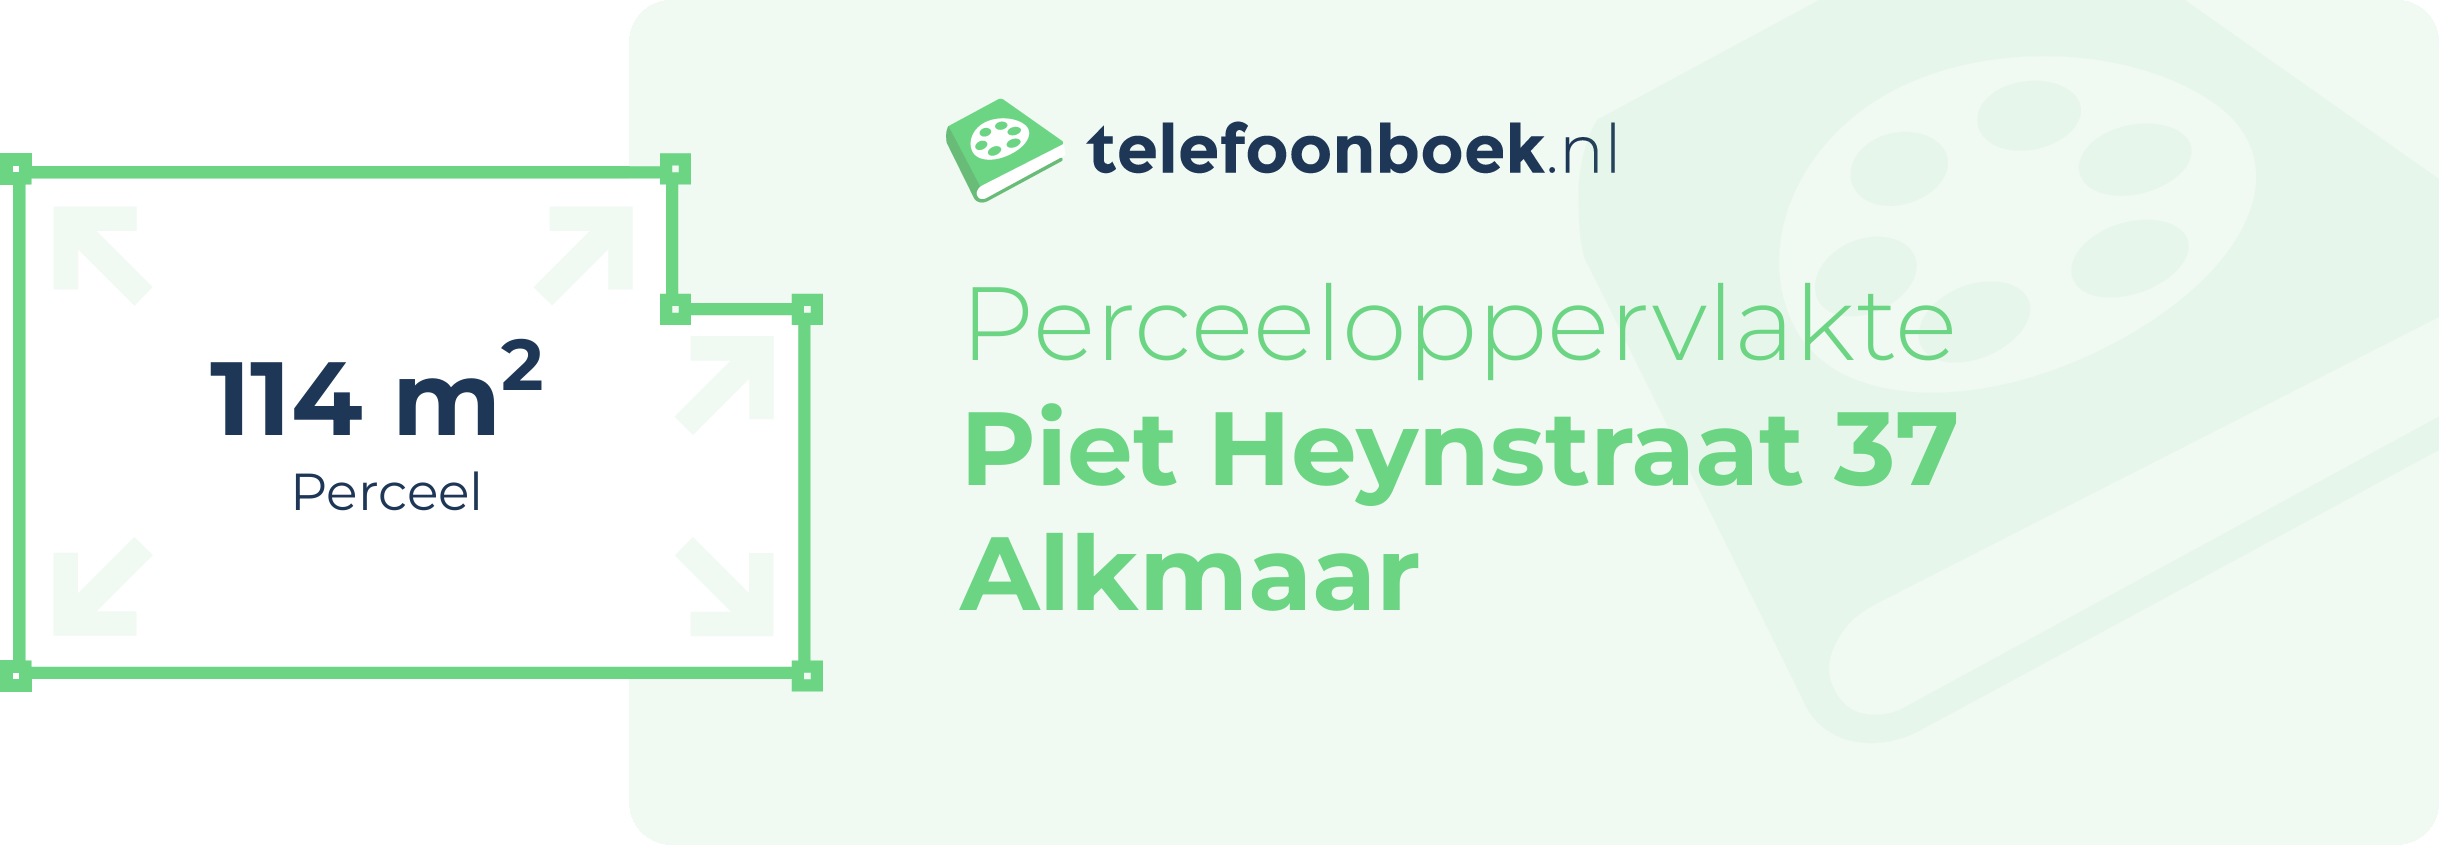 Perceeloppervlakte Piet Heynstraat 37 Alkmaar